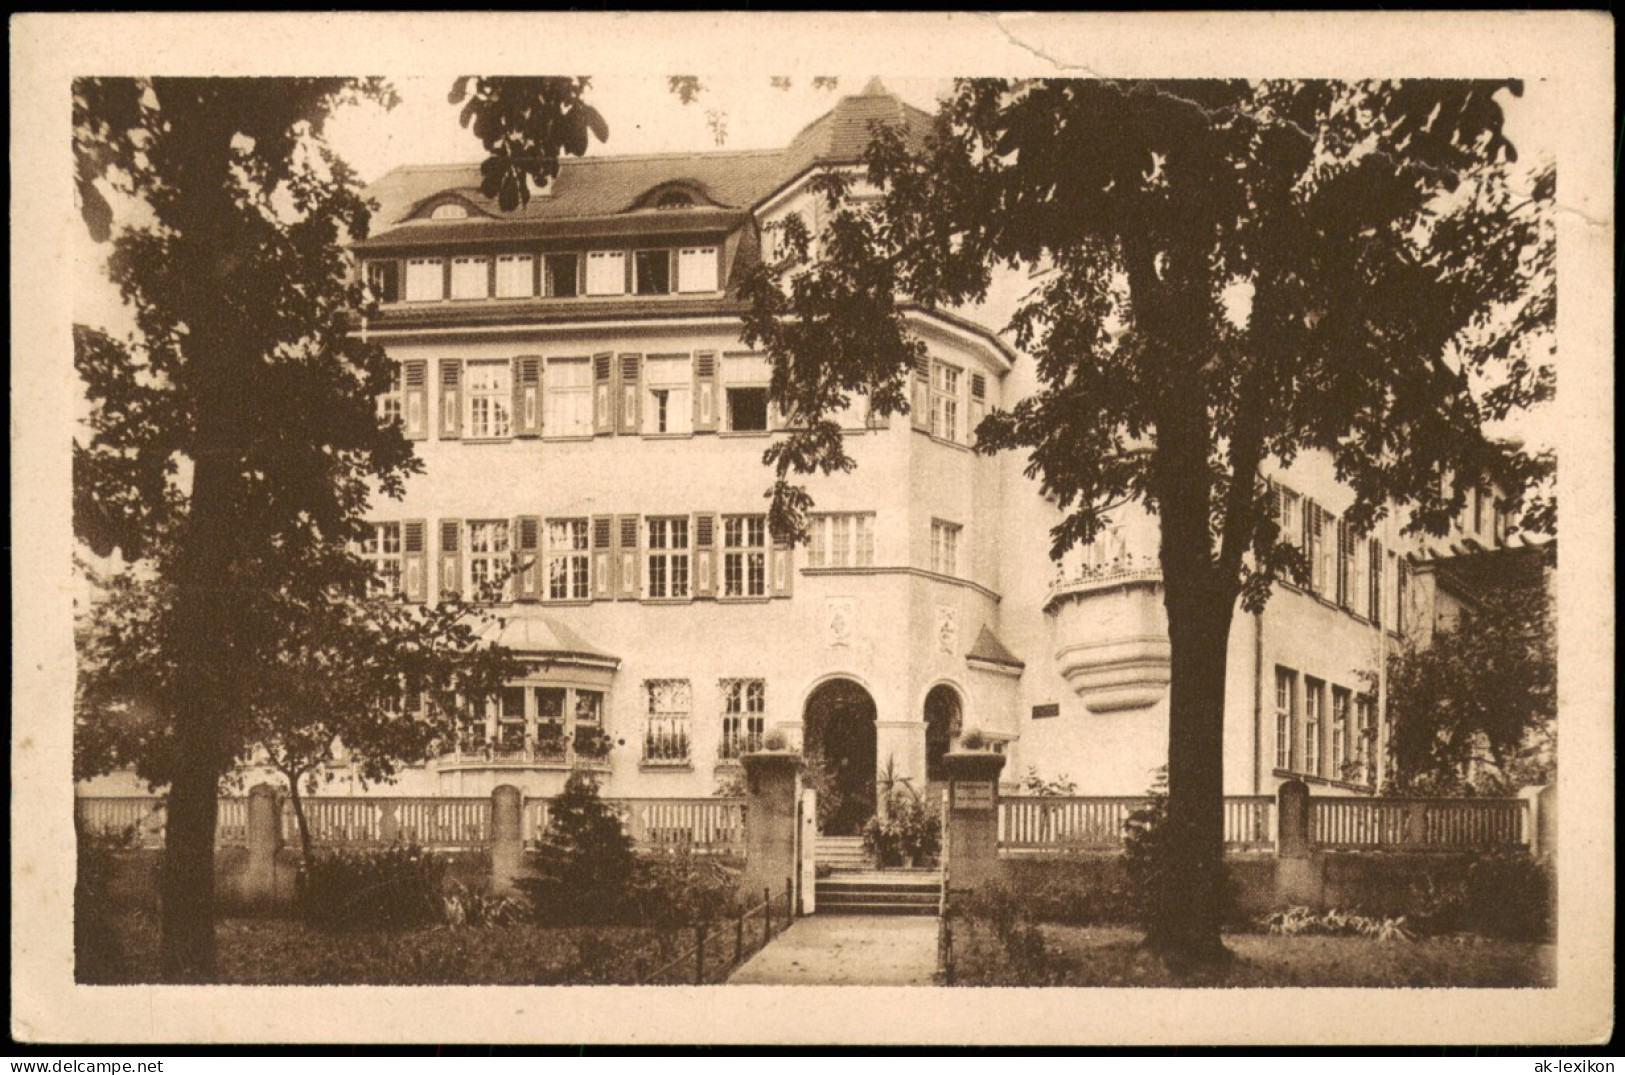 Ansichtskarte Nördlingen Haushaltungsschule 1923 - Nördlingen